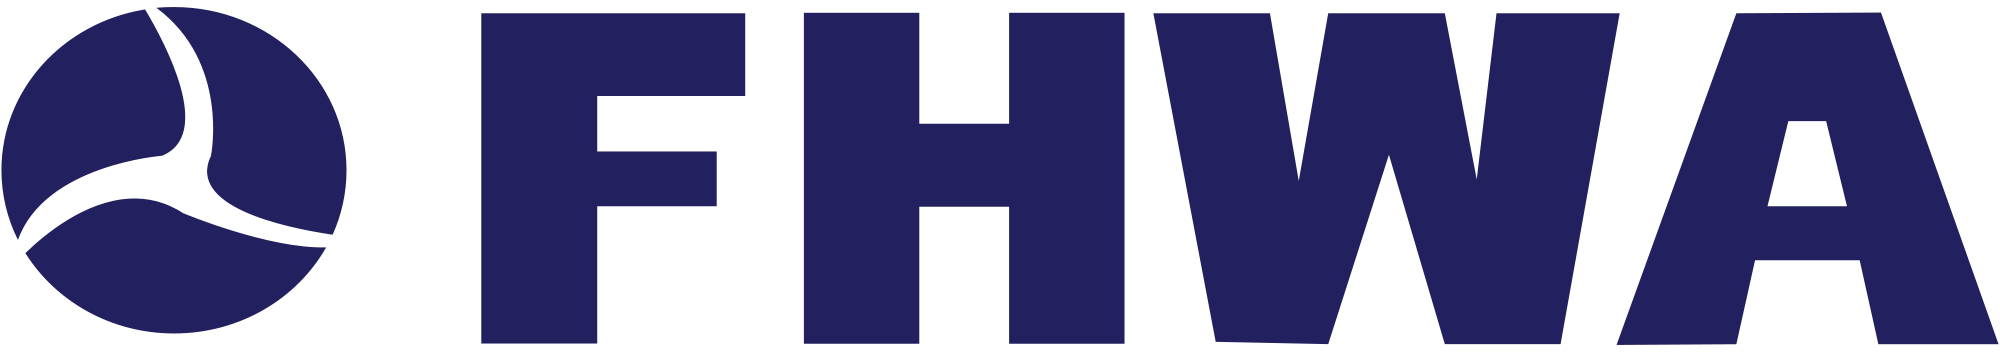 2000px-FHWA_logo.svg.png